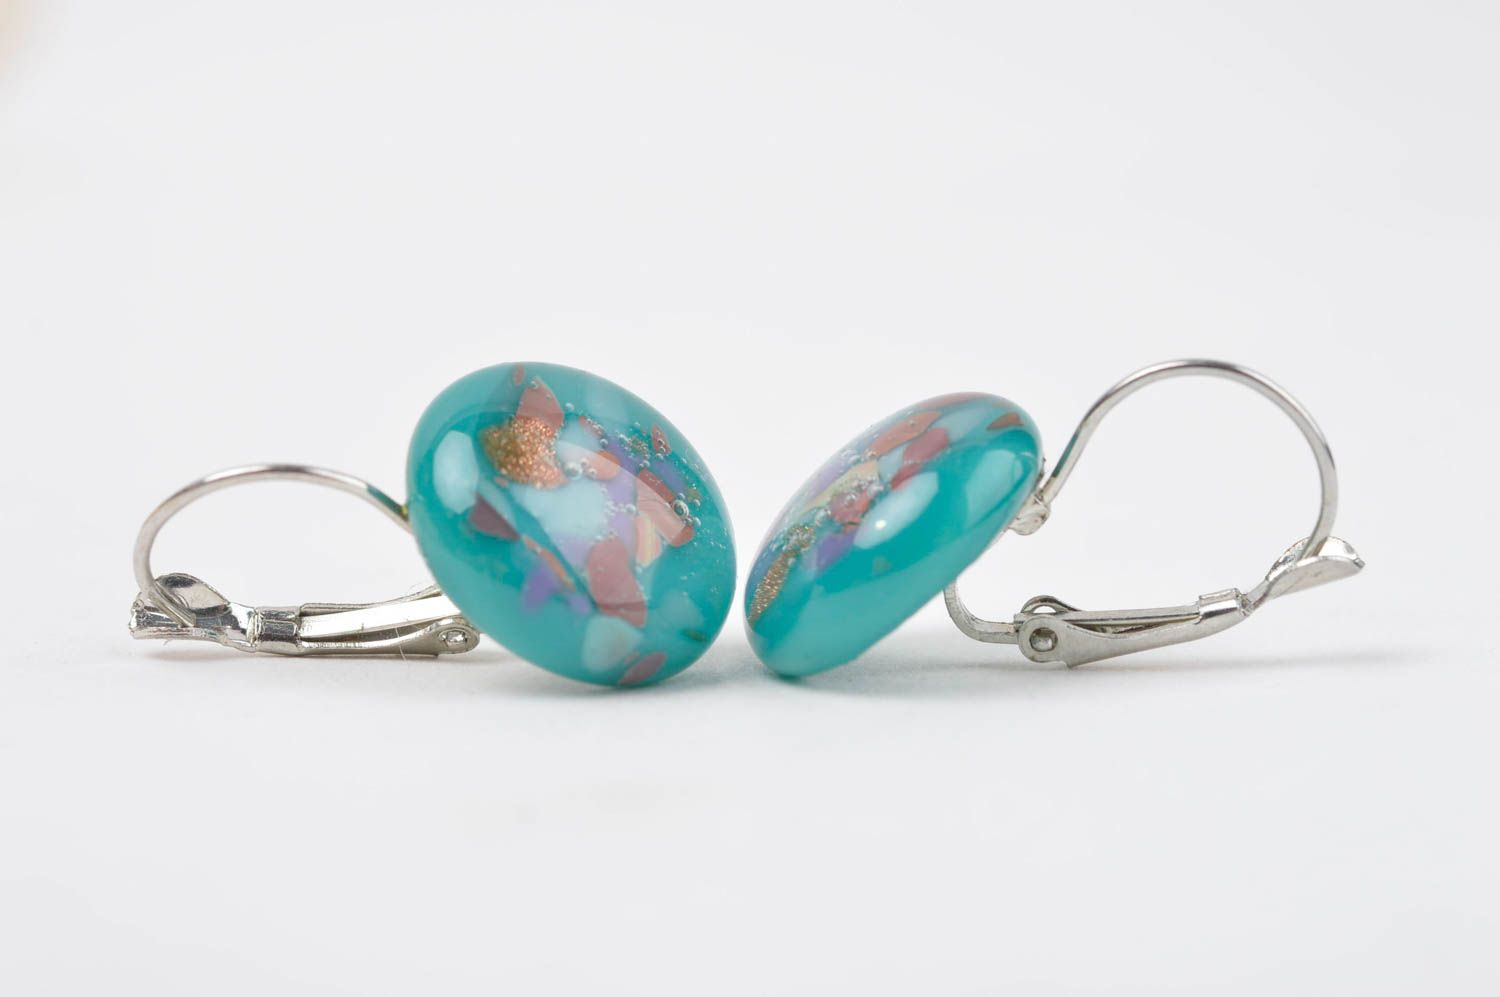 Handmade glass earrings design glass art fashion accessories for girls photo 2